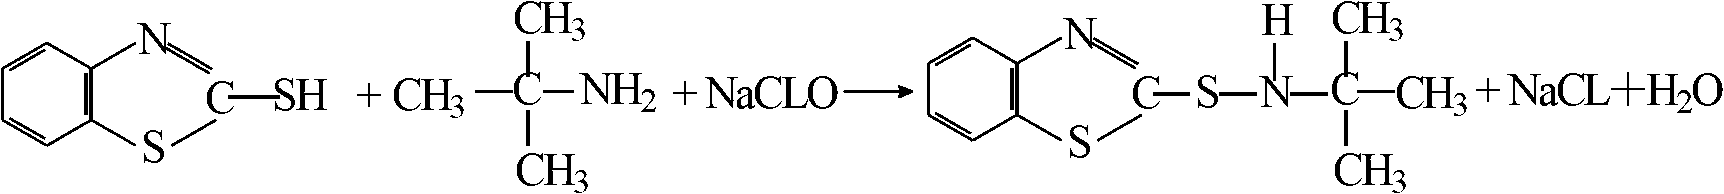 Synthesis method of rubber vulcanization accelerator TBBS (N-tert-butyl-2-benzothiazolesulfenamide)